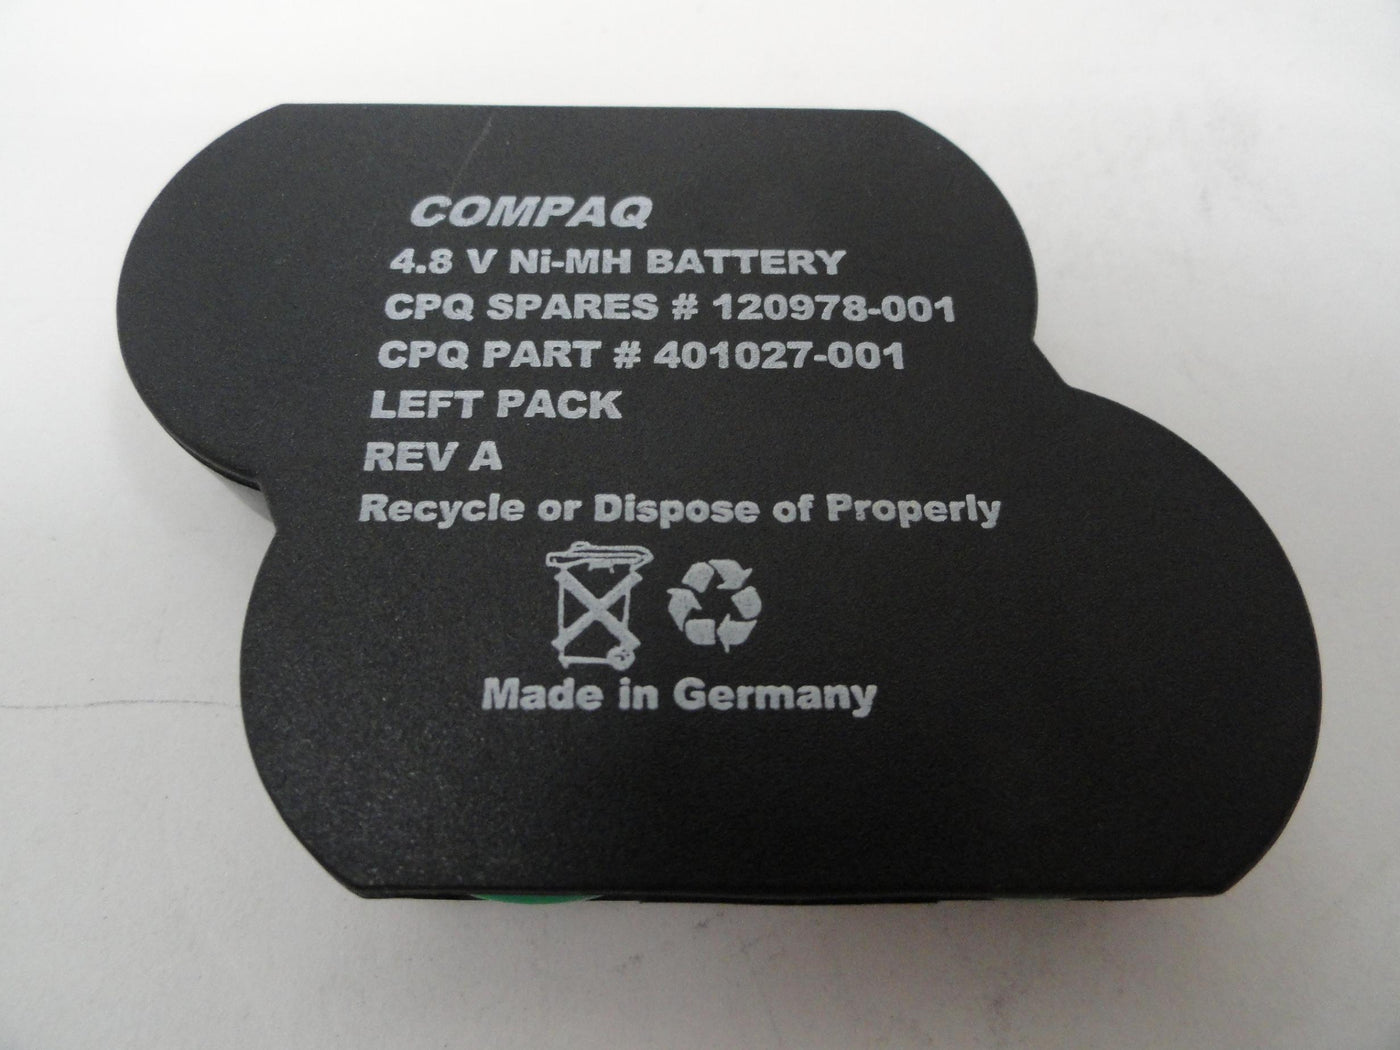 PR16623_120978-001_HP 4.8v Ni-MH Back Up Battery Left From DL580R01 - Image2